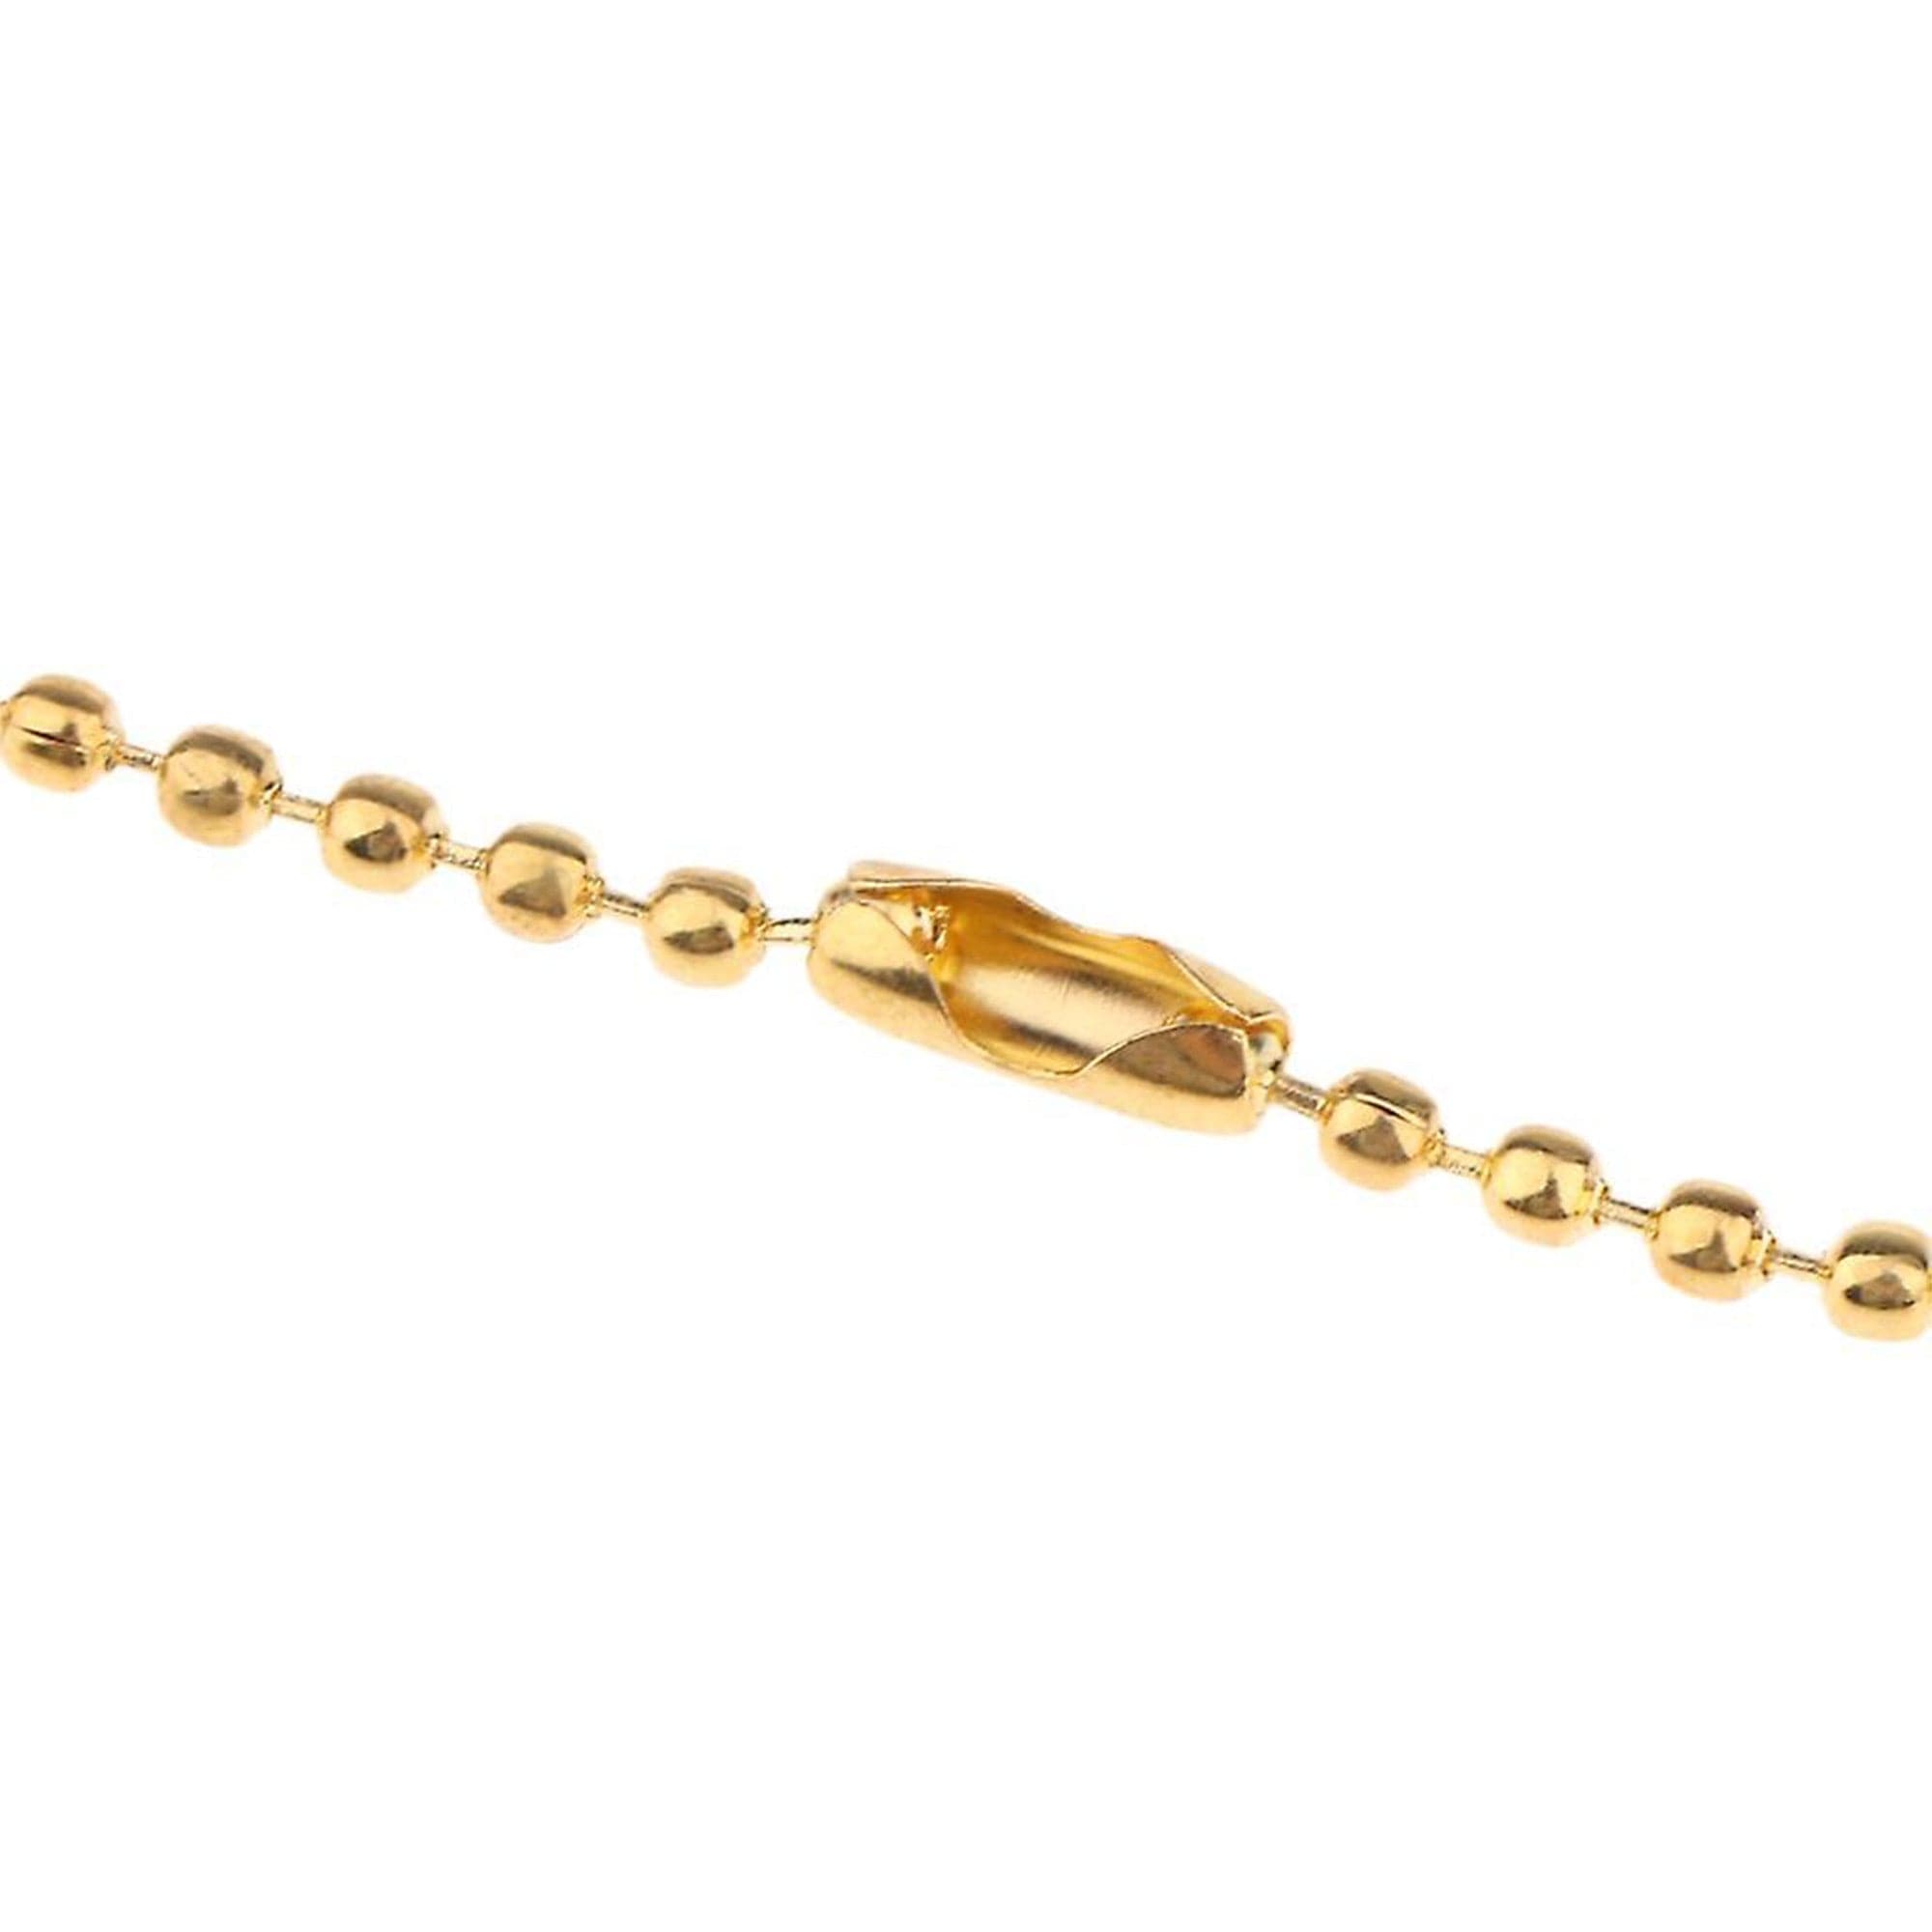 Eson - Razor Blade Shaped Pendant Necklace (Gold Colour)